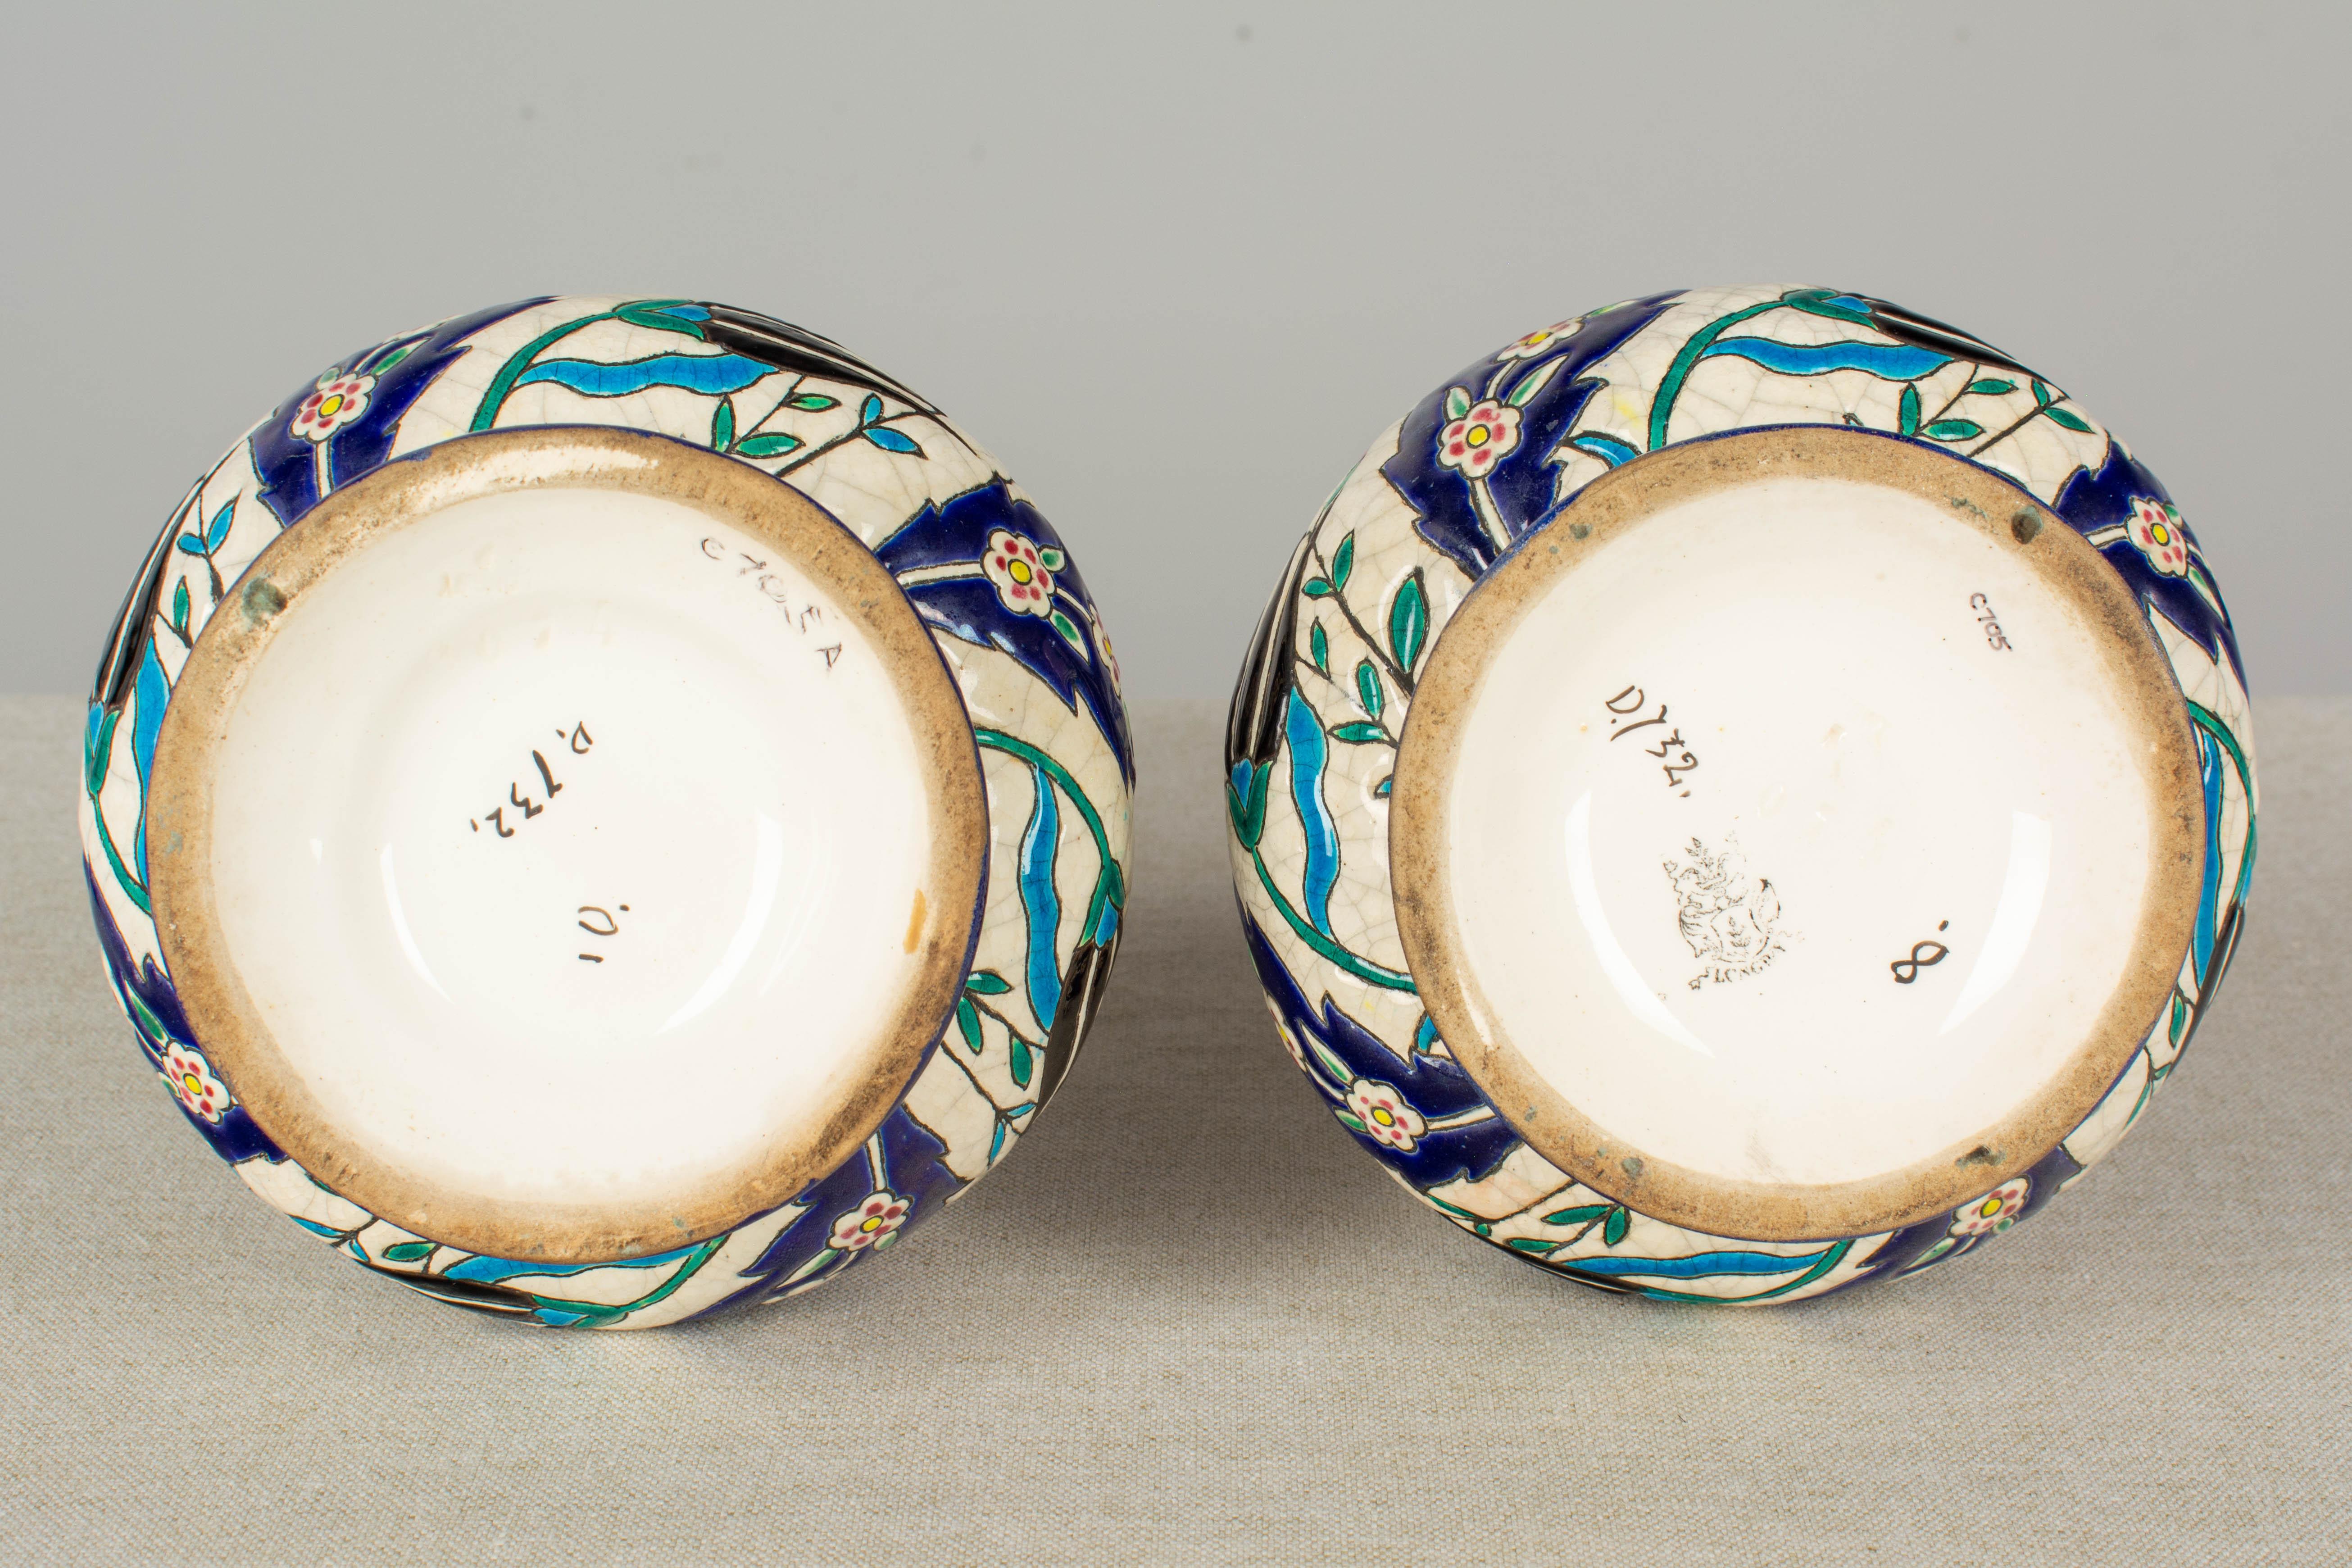 Cloissoné French Longwy Ceramic Cloisonné Vases, Pair of the 19th Century